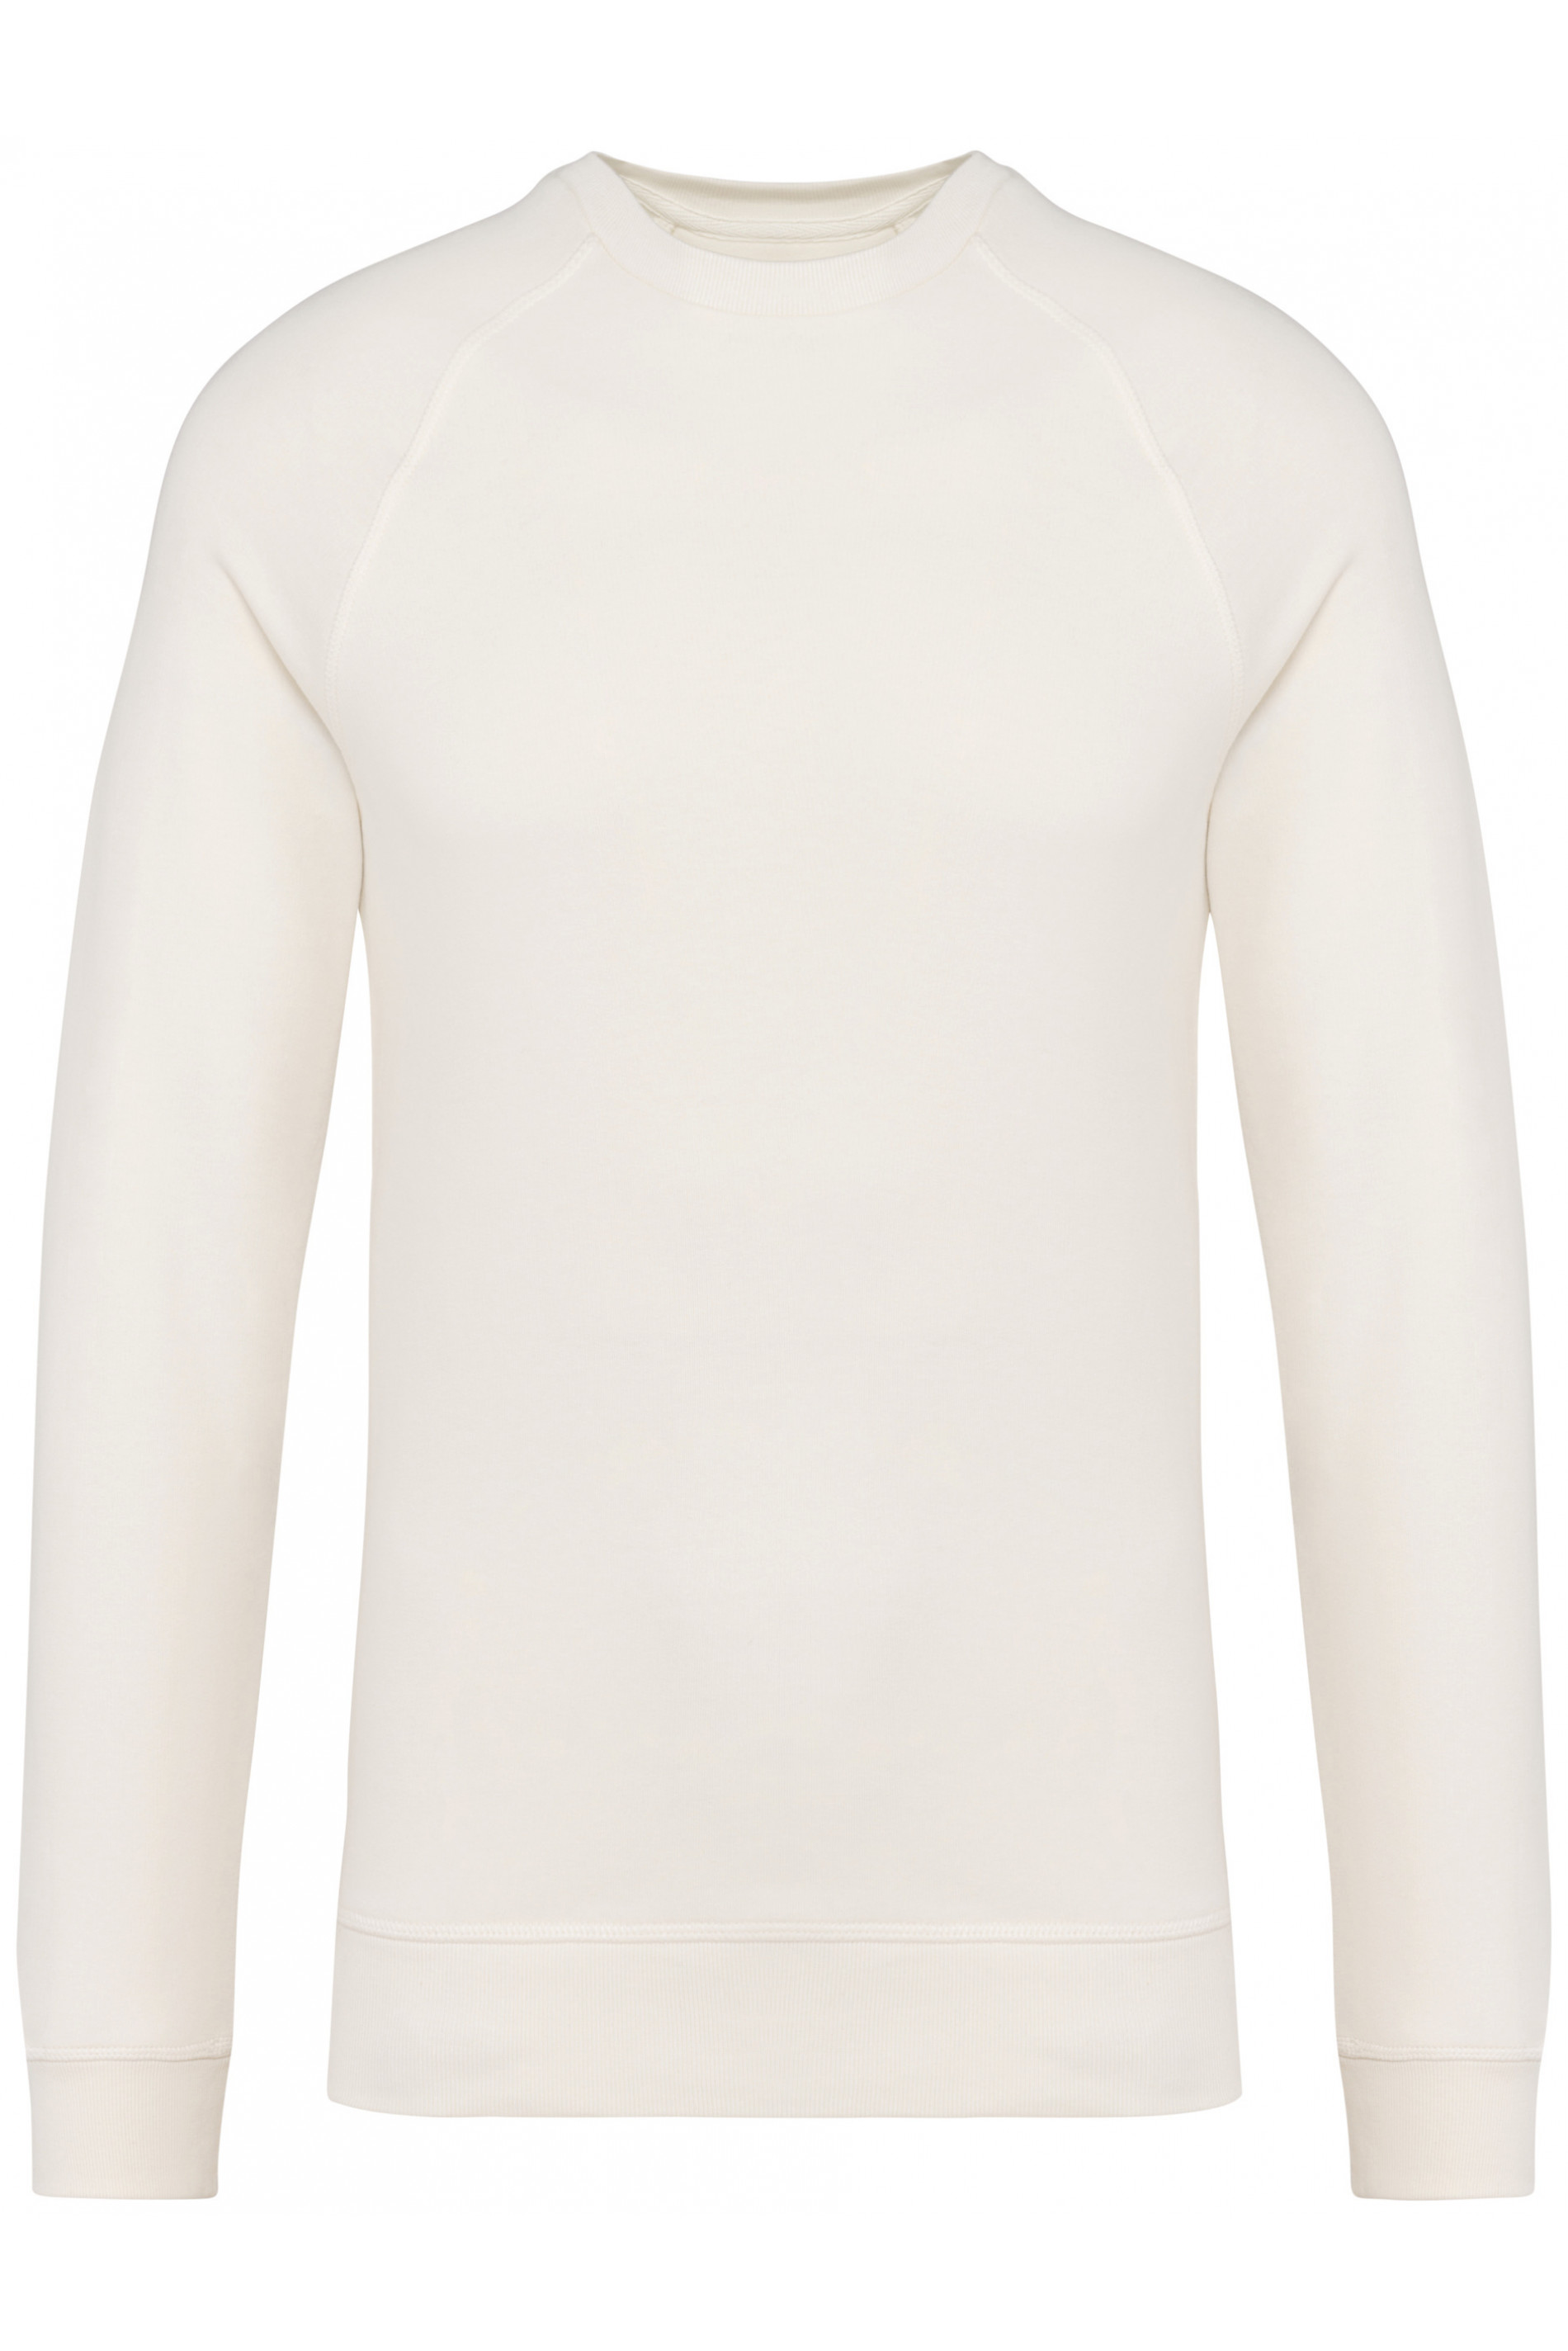 Unisex organic cotton raglan sweatshirt 350 g/m² cotton ART® Ivory M